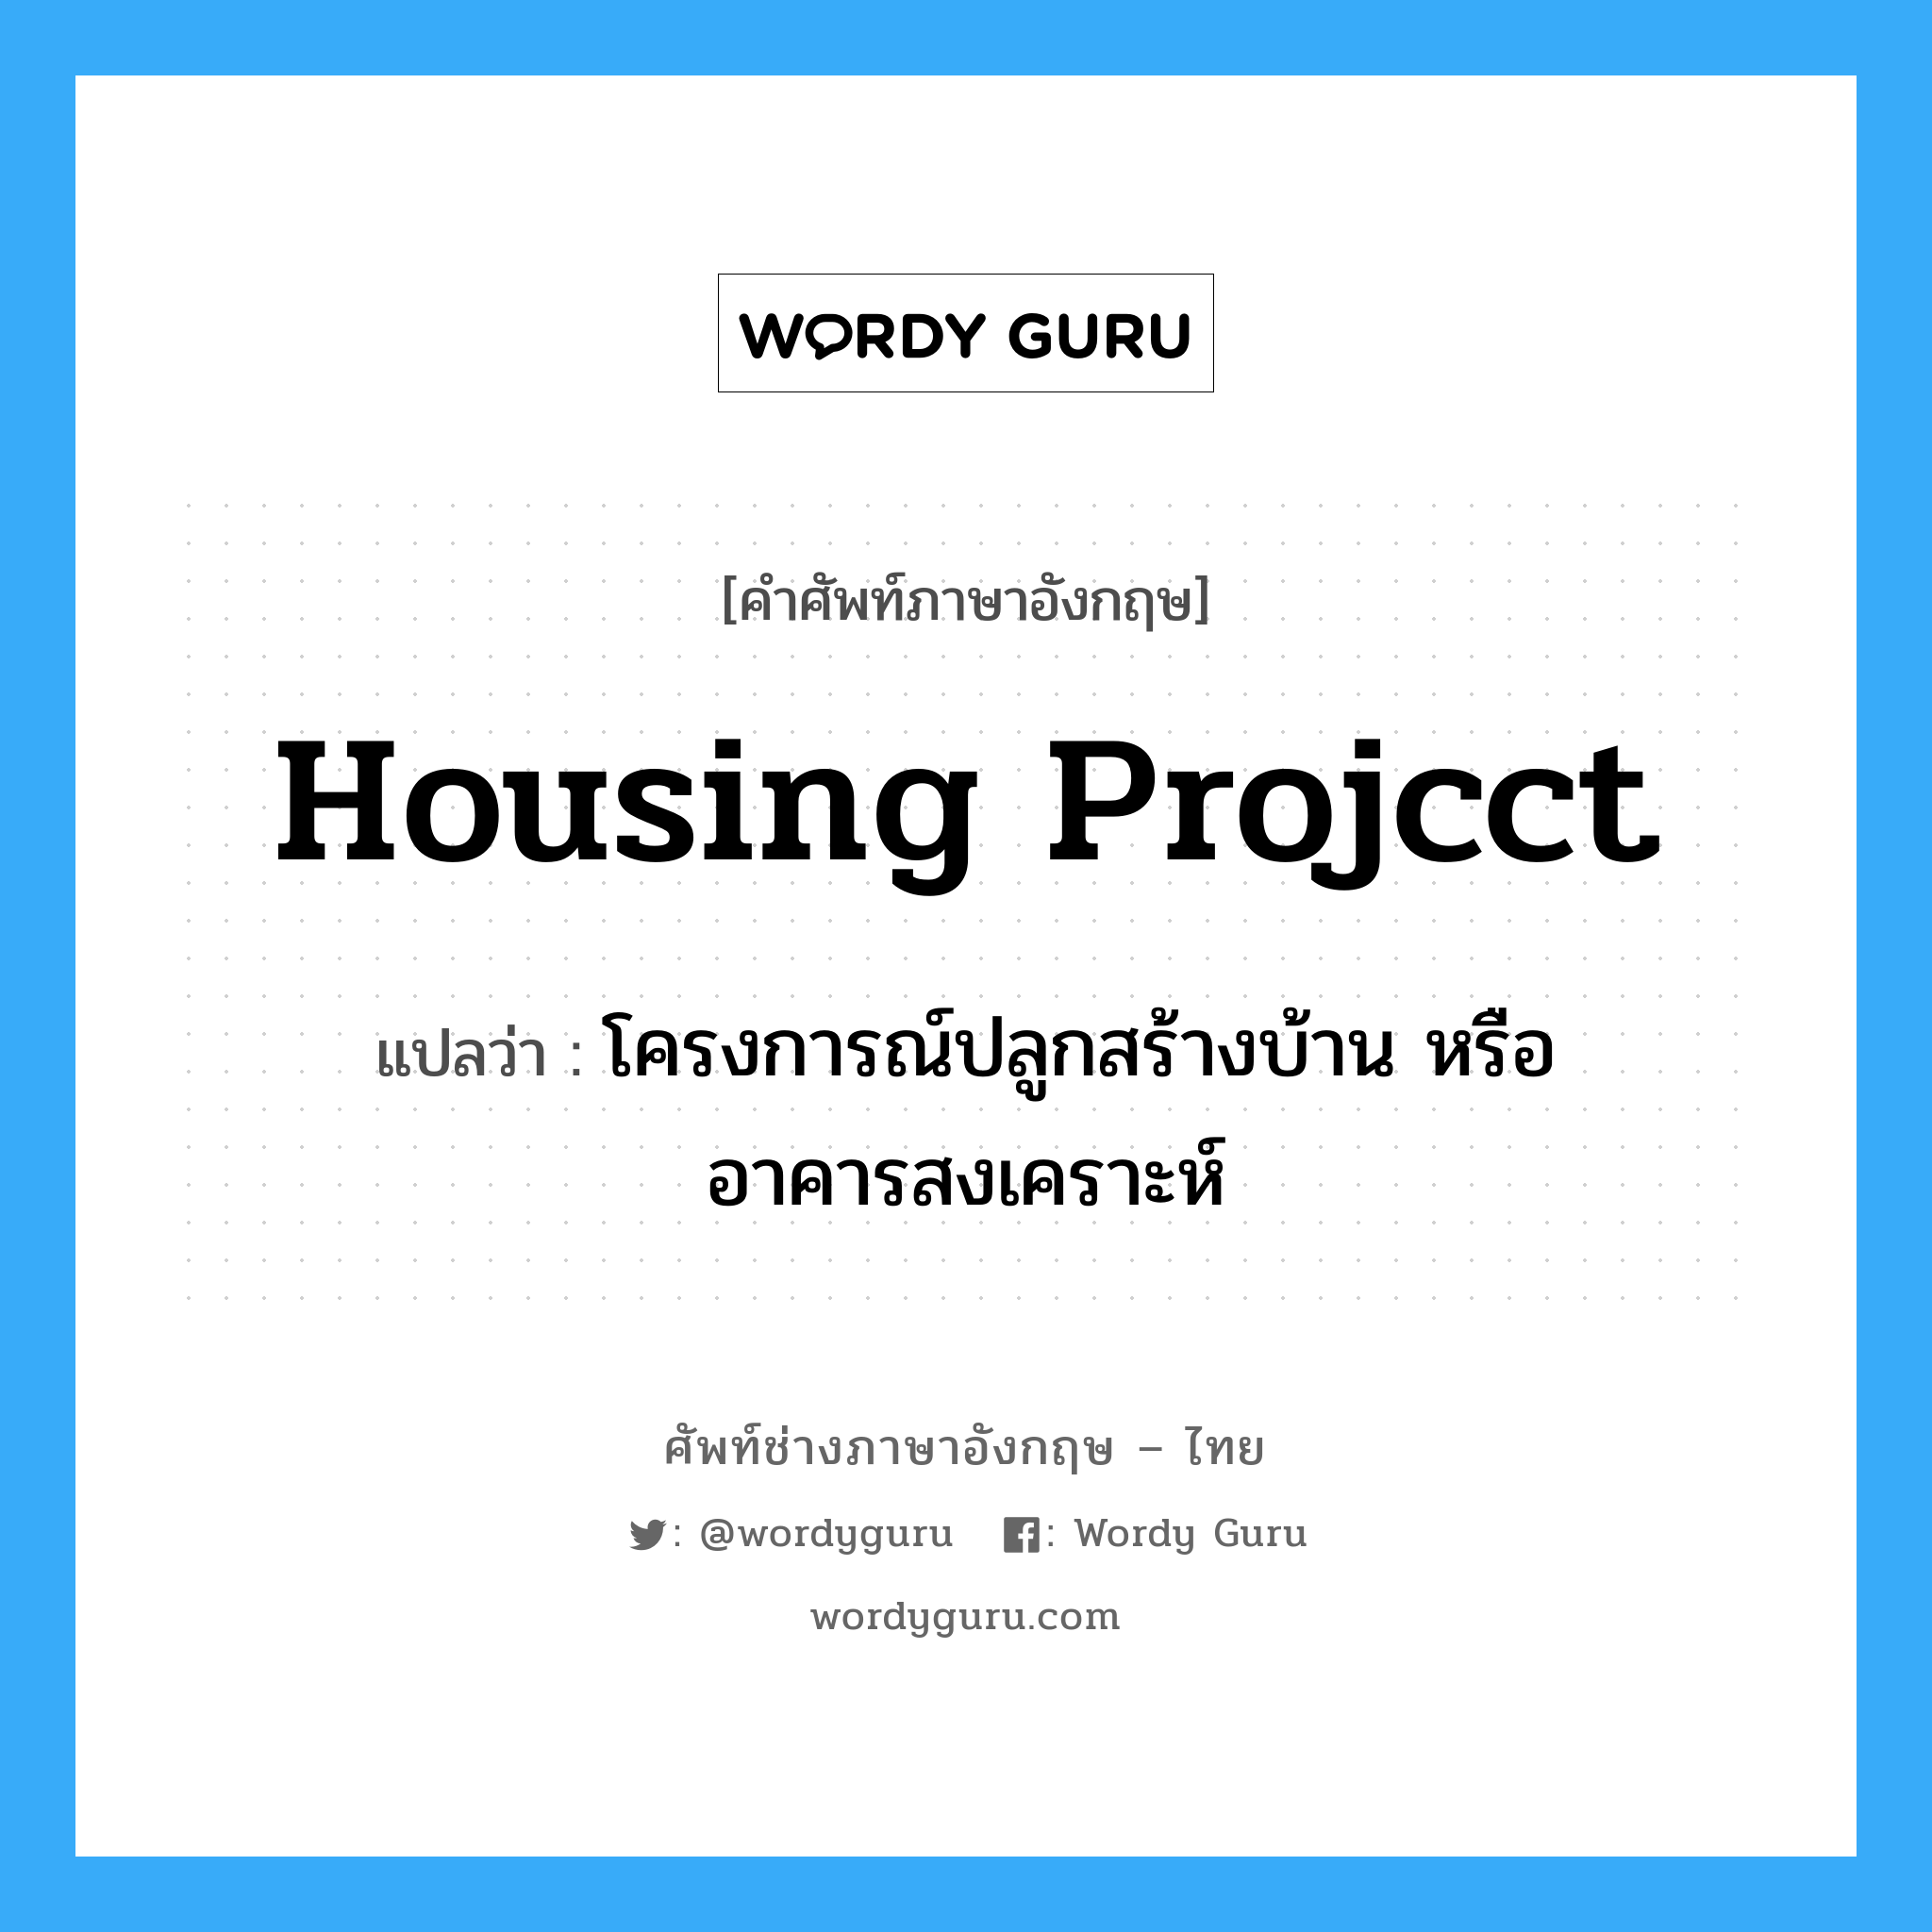 housing projcct แปลว่า?, คำศัพท์ช่างภาษาอังกฤษ - ไทย housing projcct คำศัพท์ภาษาอังกฤษ housing projcct แปลว่า โครงการณ์ปลูกสร้างบ้าน หรืออาคารสงเคราะห์